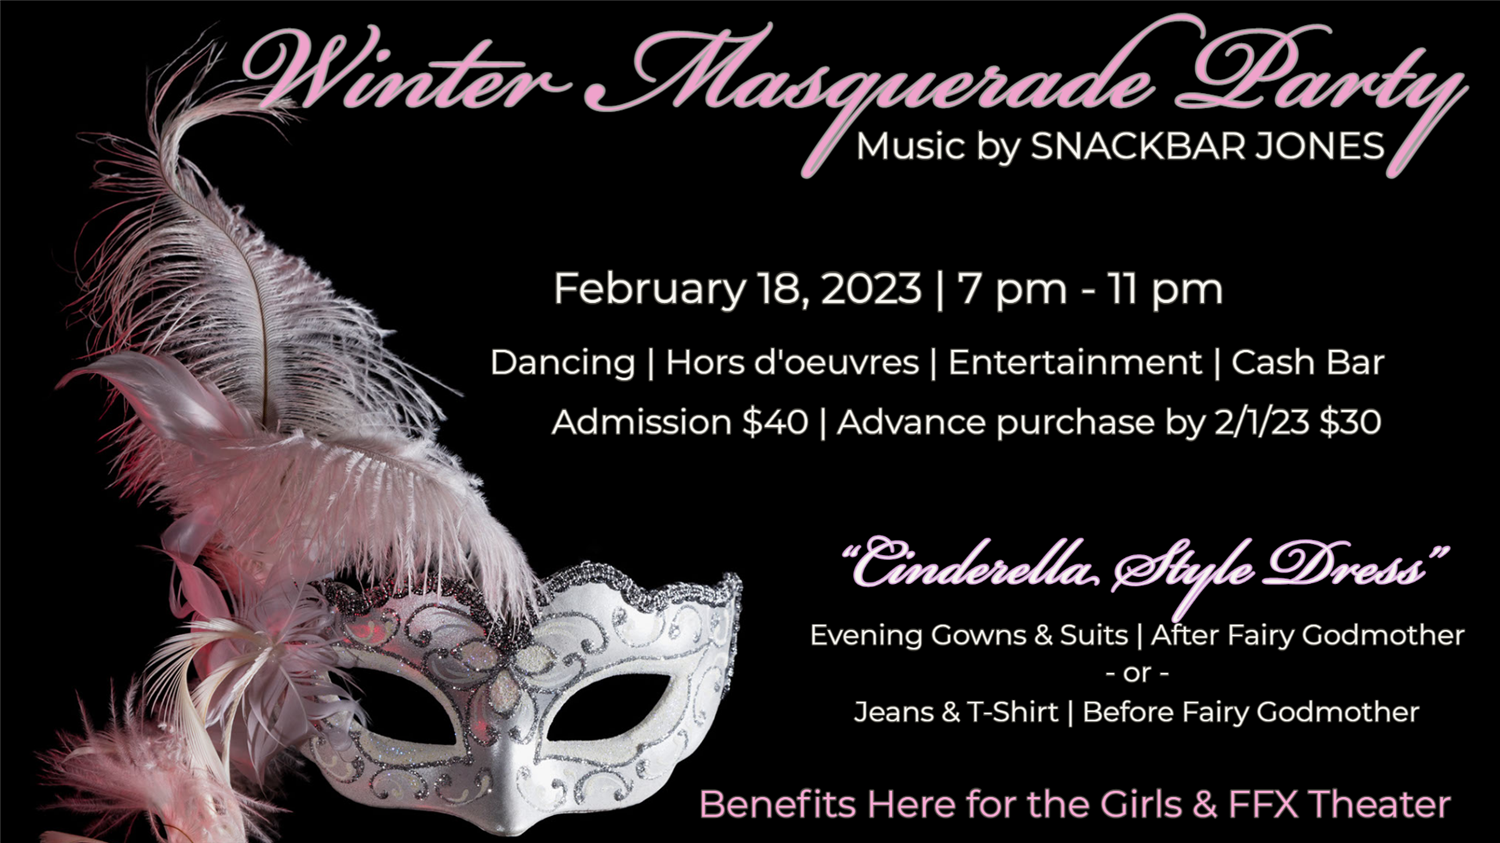 Winter Masquerade Party BENEFIT for Here for the Girls on feb. 18, 19:00@FFX Theatre - Compra entradas y obtén información enFamily Fun Xperience tickets.ffxshow.org